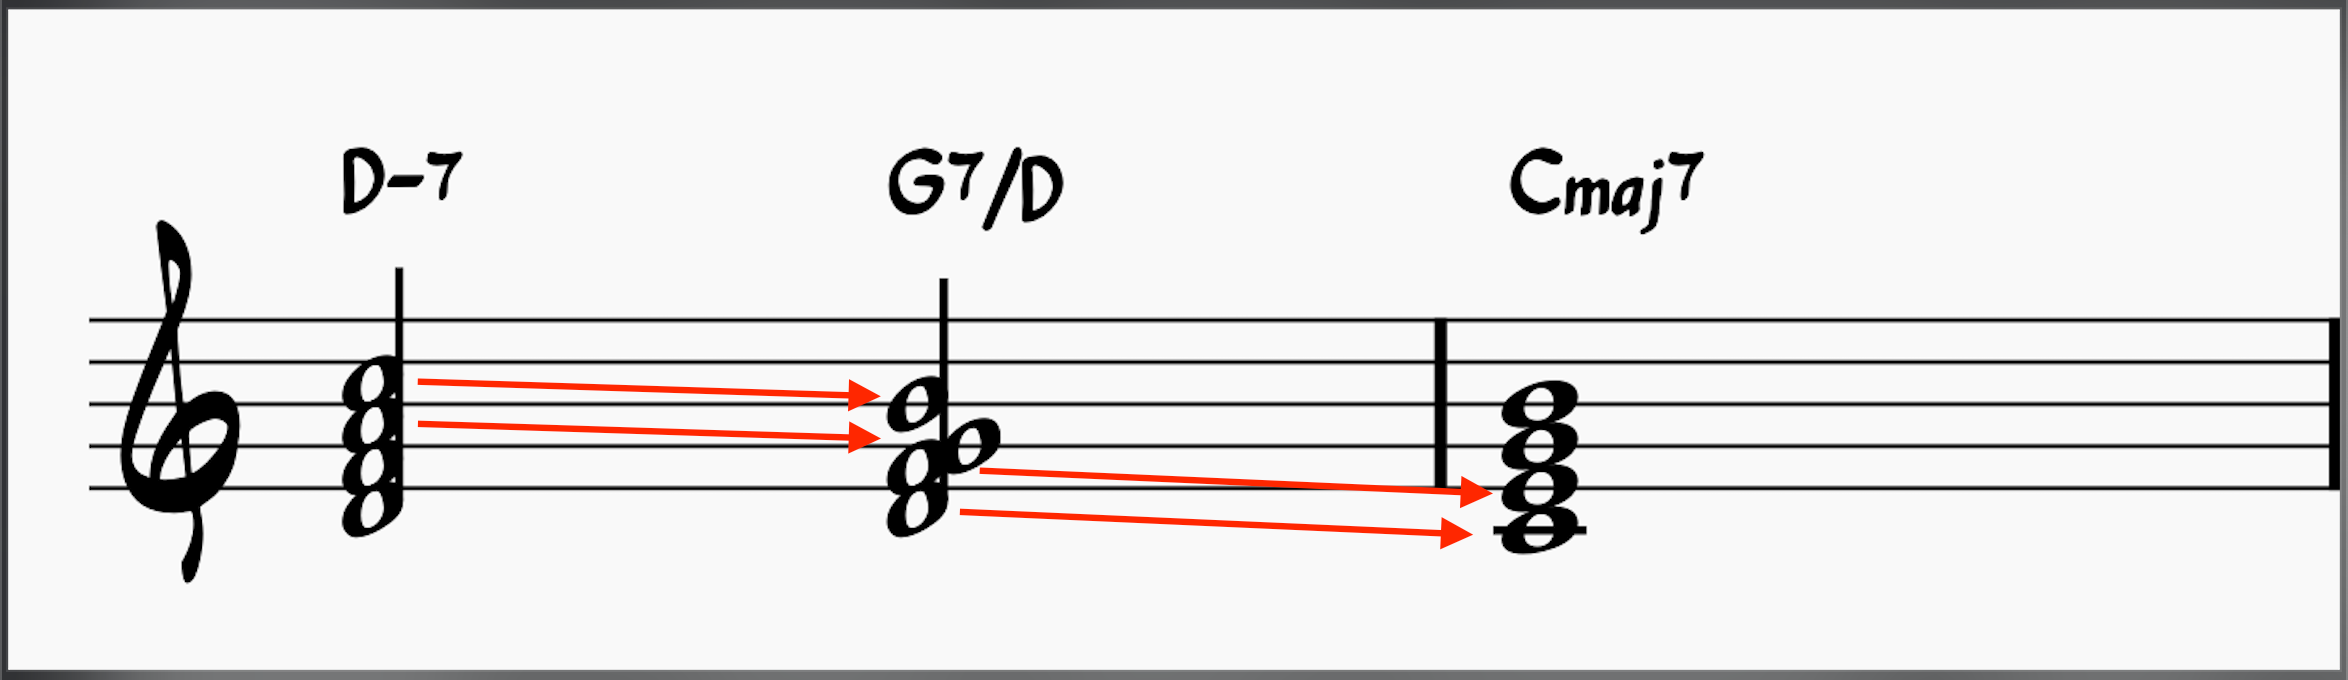 ii-V-I progression using chord inversions